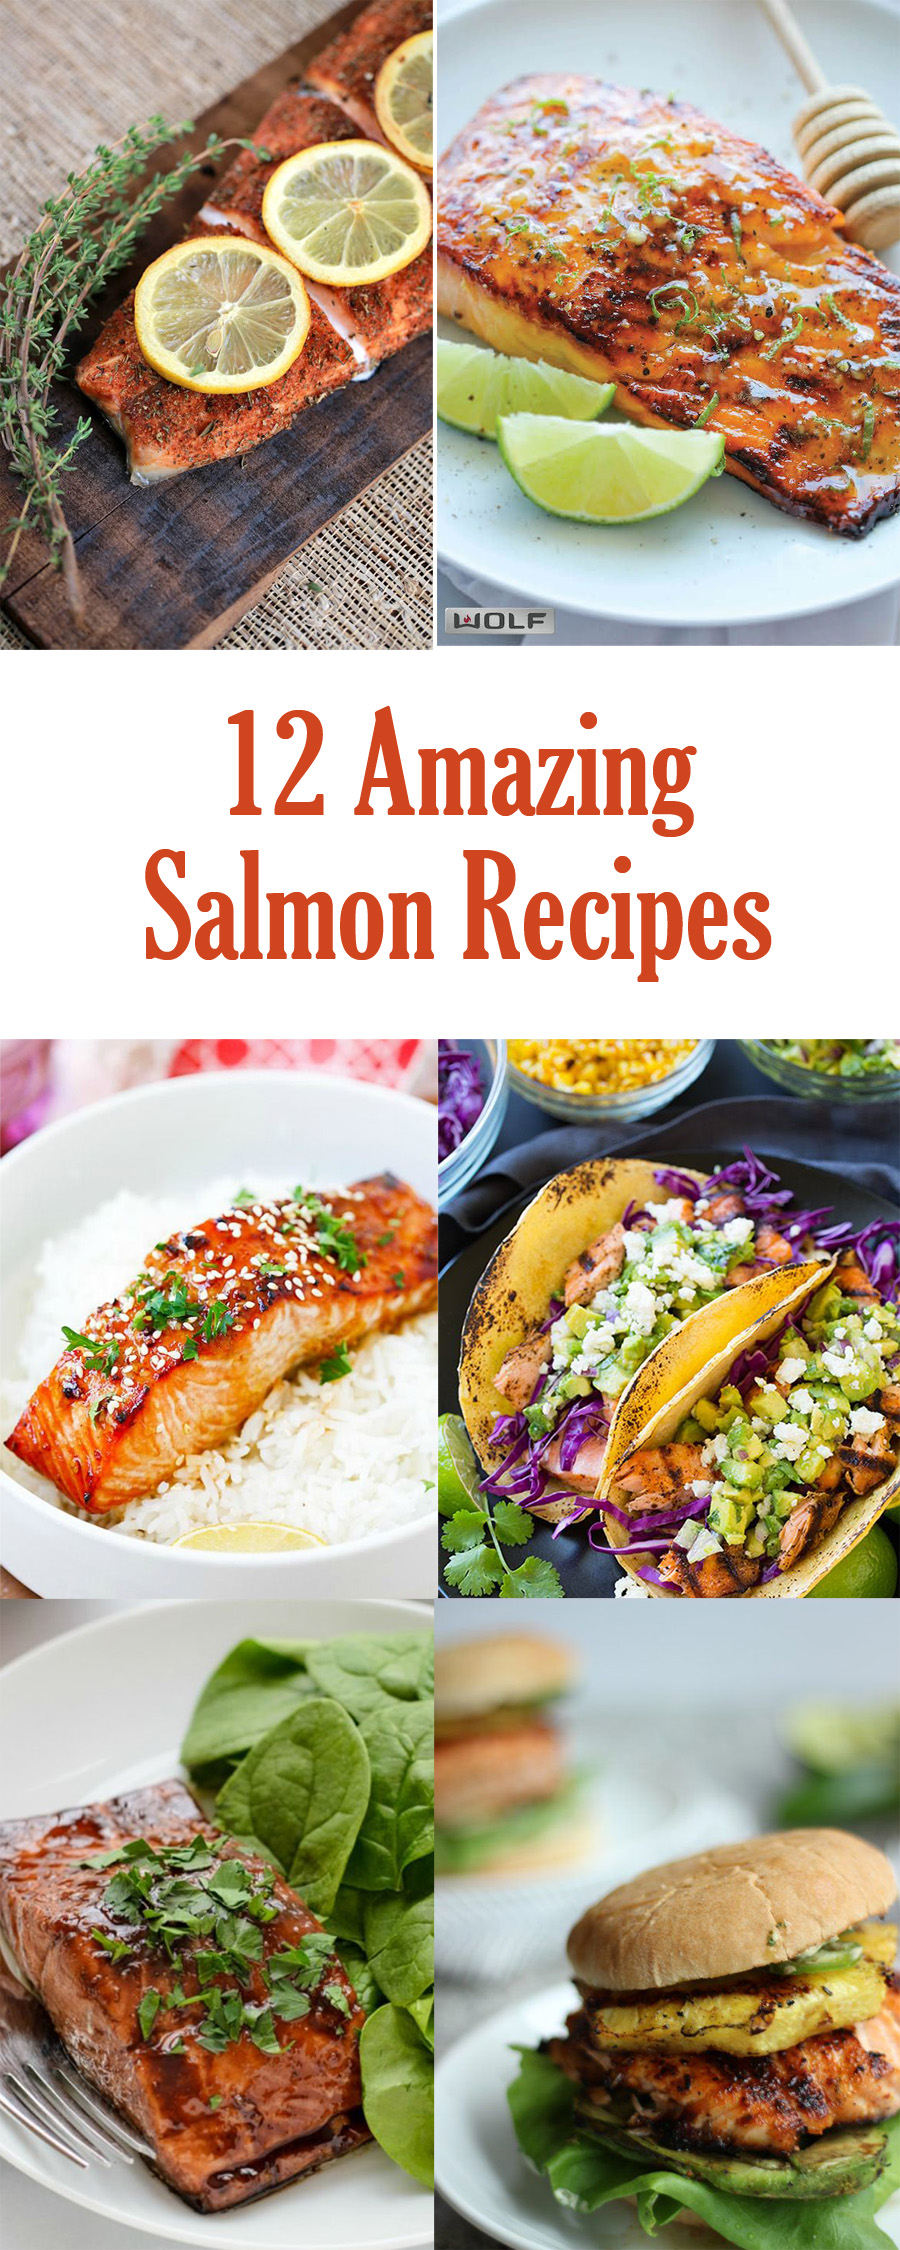 12 Amazing Salmon Recipes - Honeybear Lane